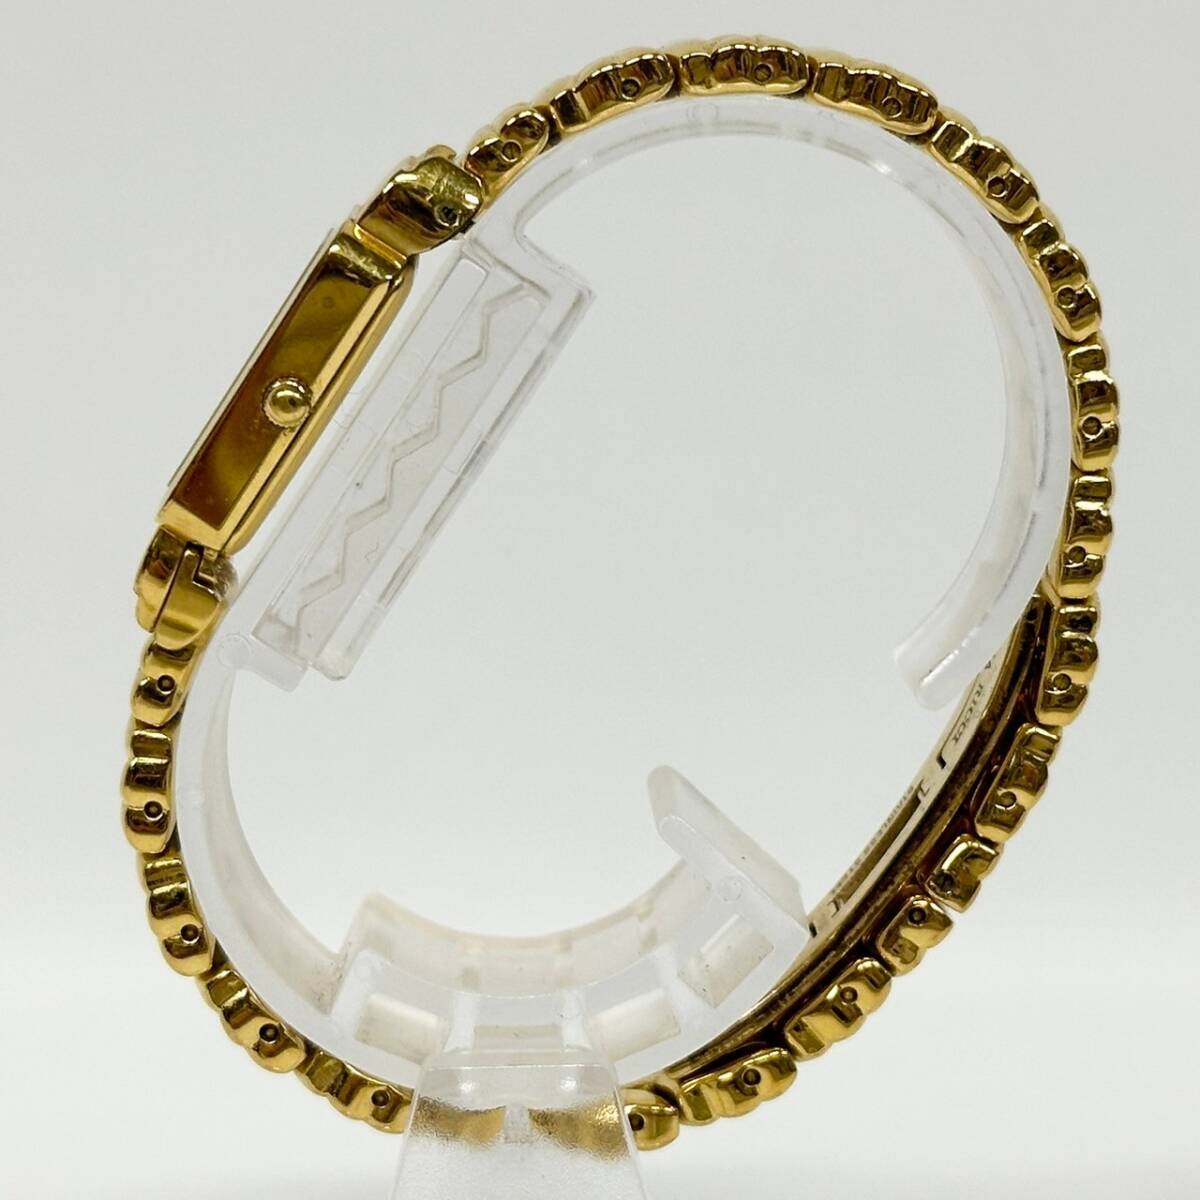 1 jpy ~[ real movement ] Nina Ricci NINA RICCI S950 quartz lady's wristwatch shell face square face Rome n 2 hands Switzerland made G142878